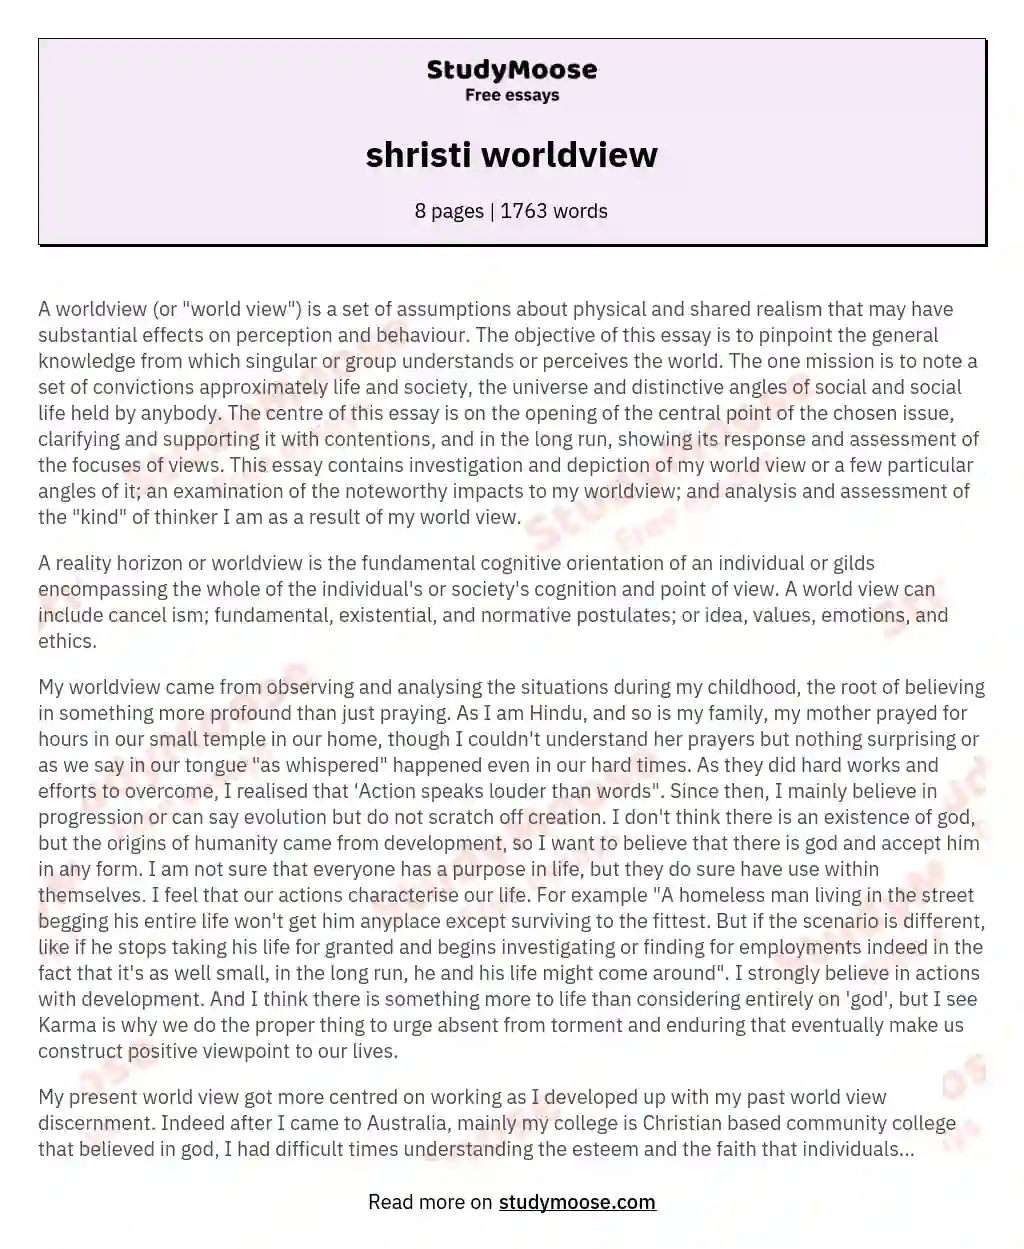 shristi worldview essay